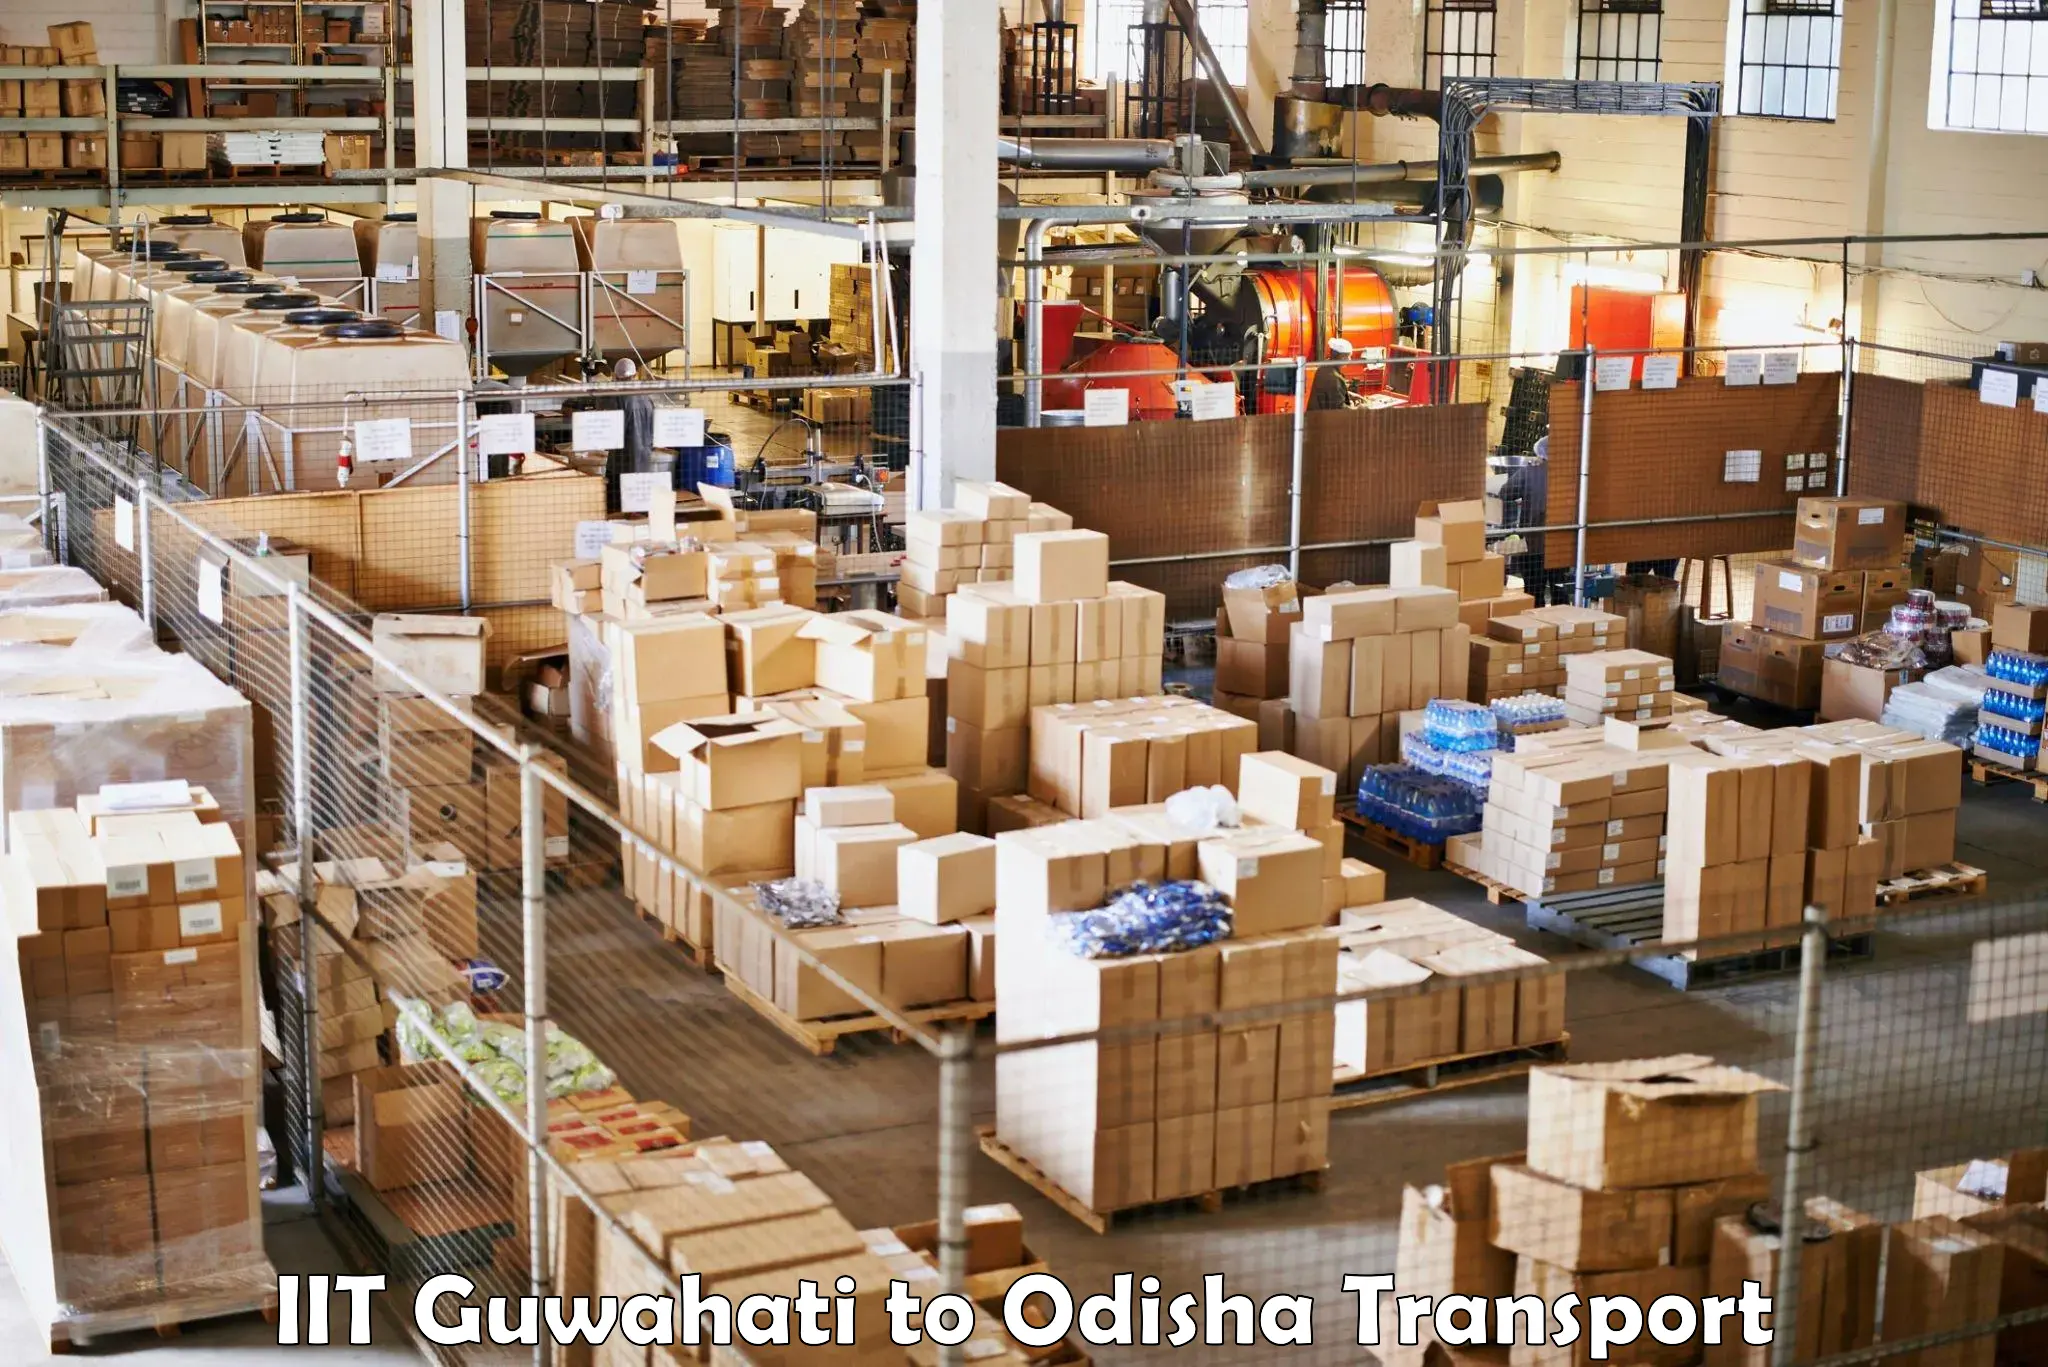 Daily parcel service transport IIT Guwahati to Sambalpur